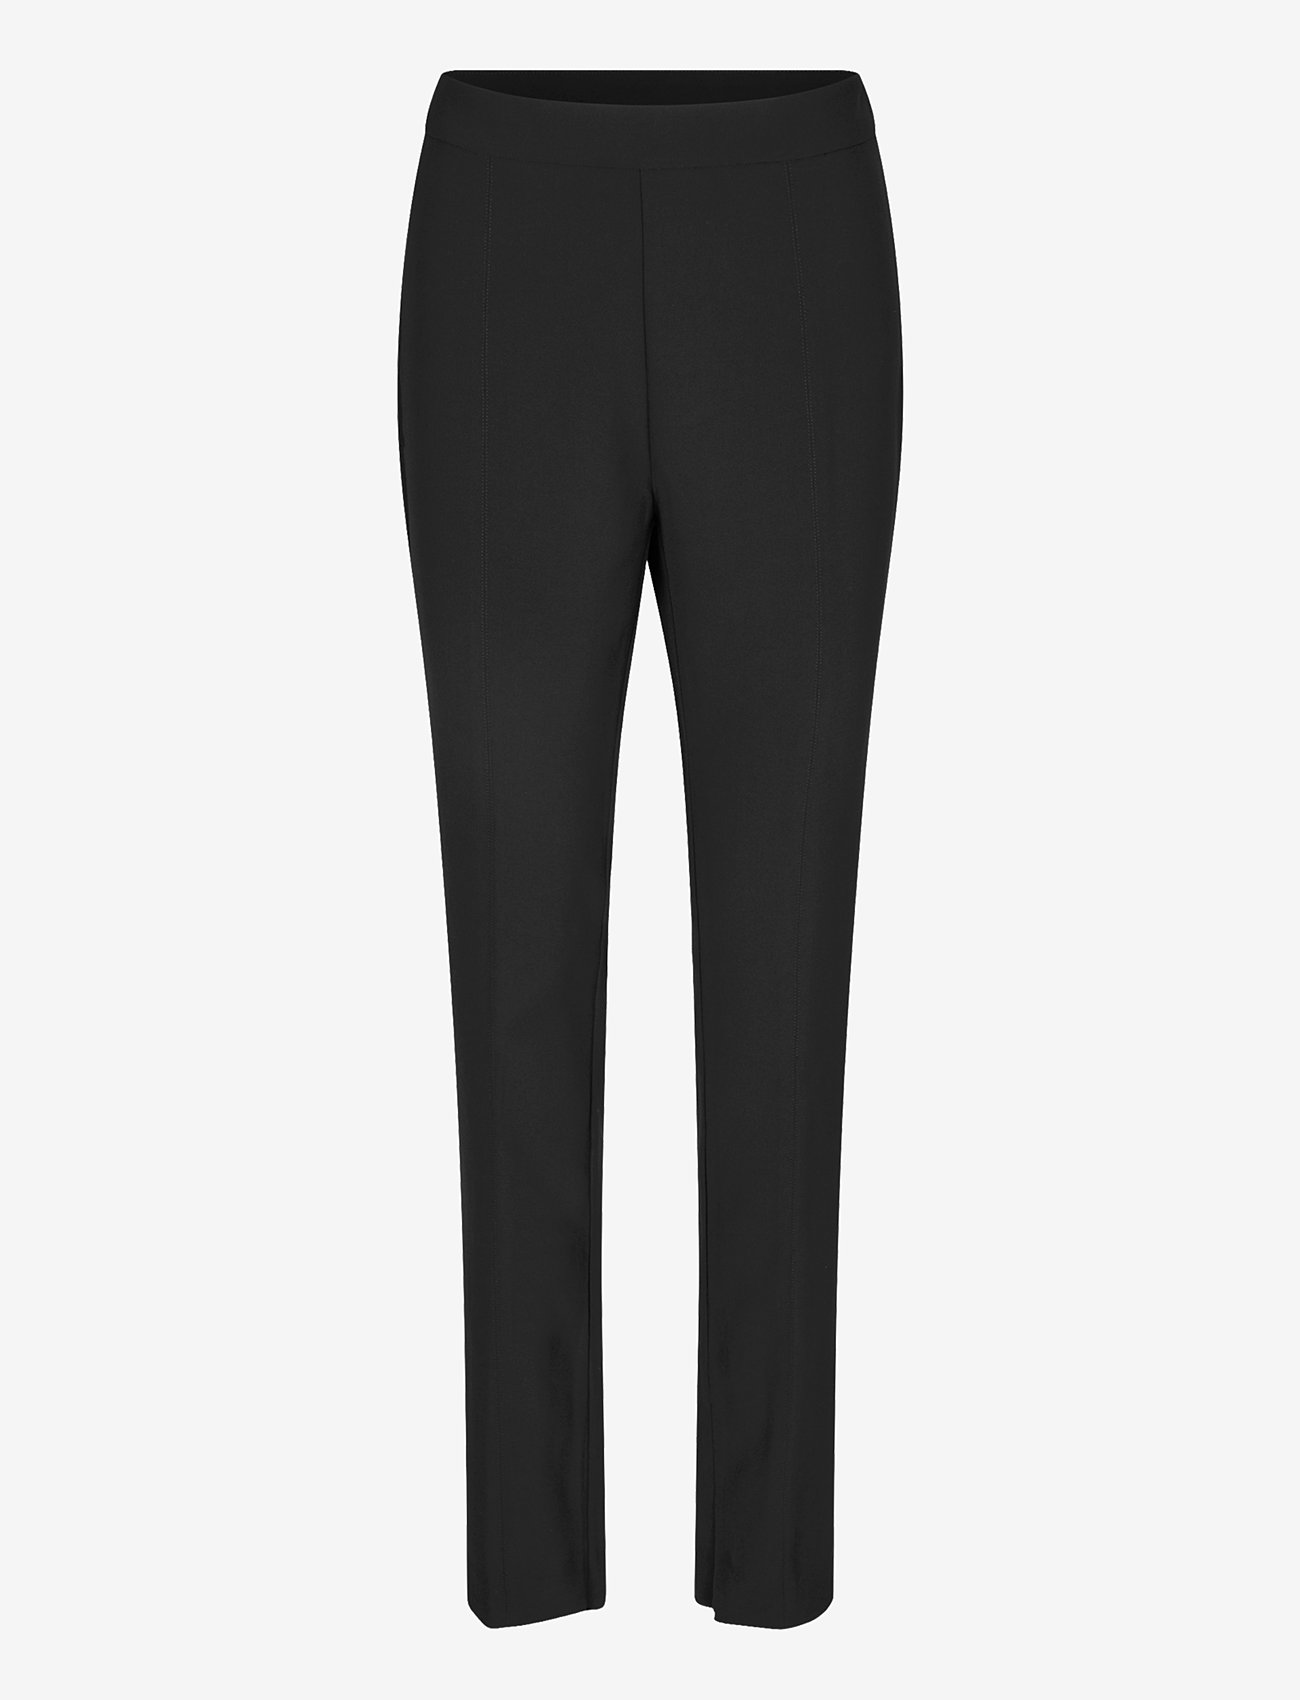 Second Female - Fique Zip Trousers - tiesaus kirpimo kelnės - black - 0